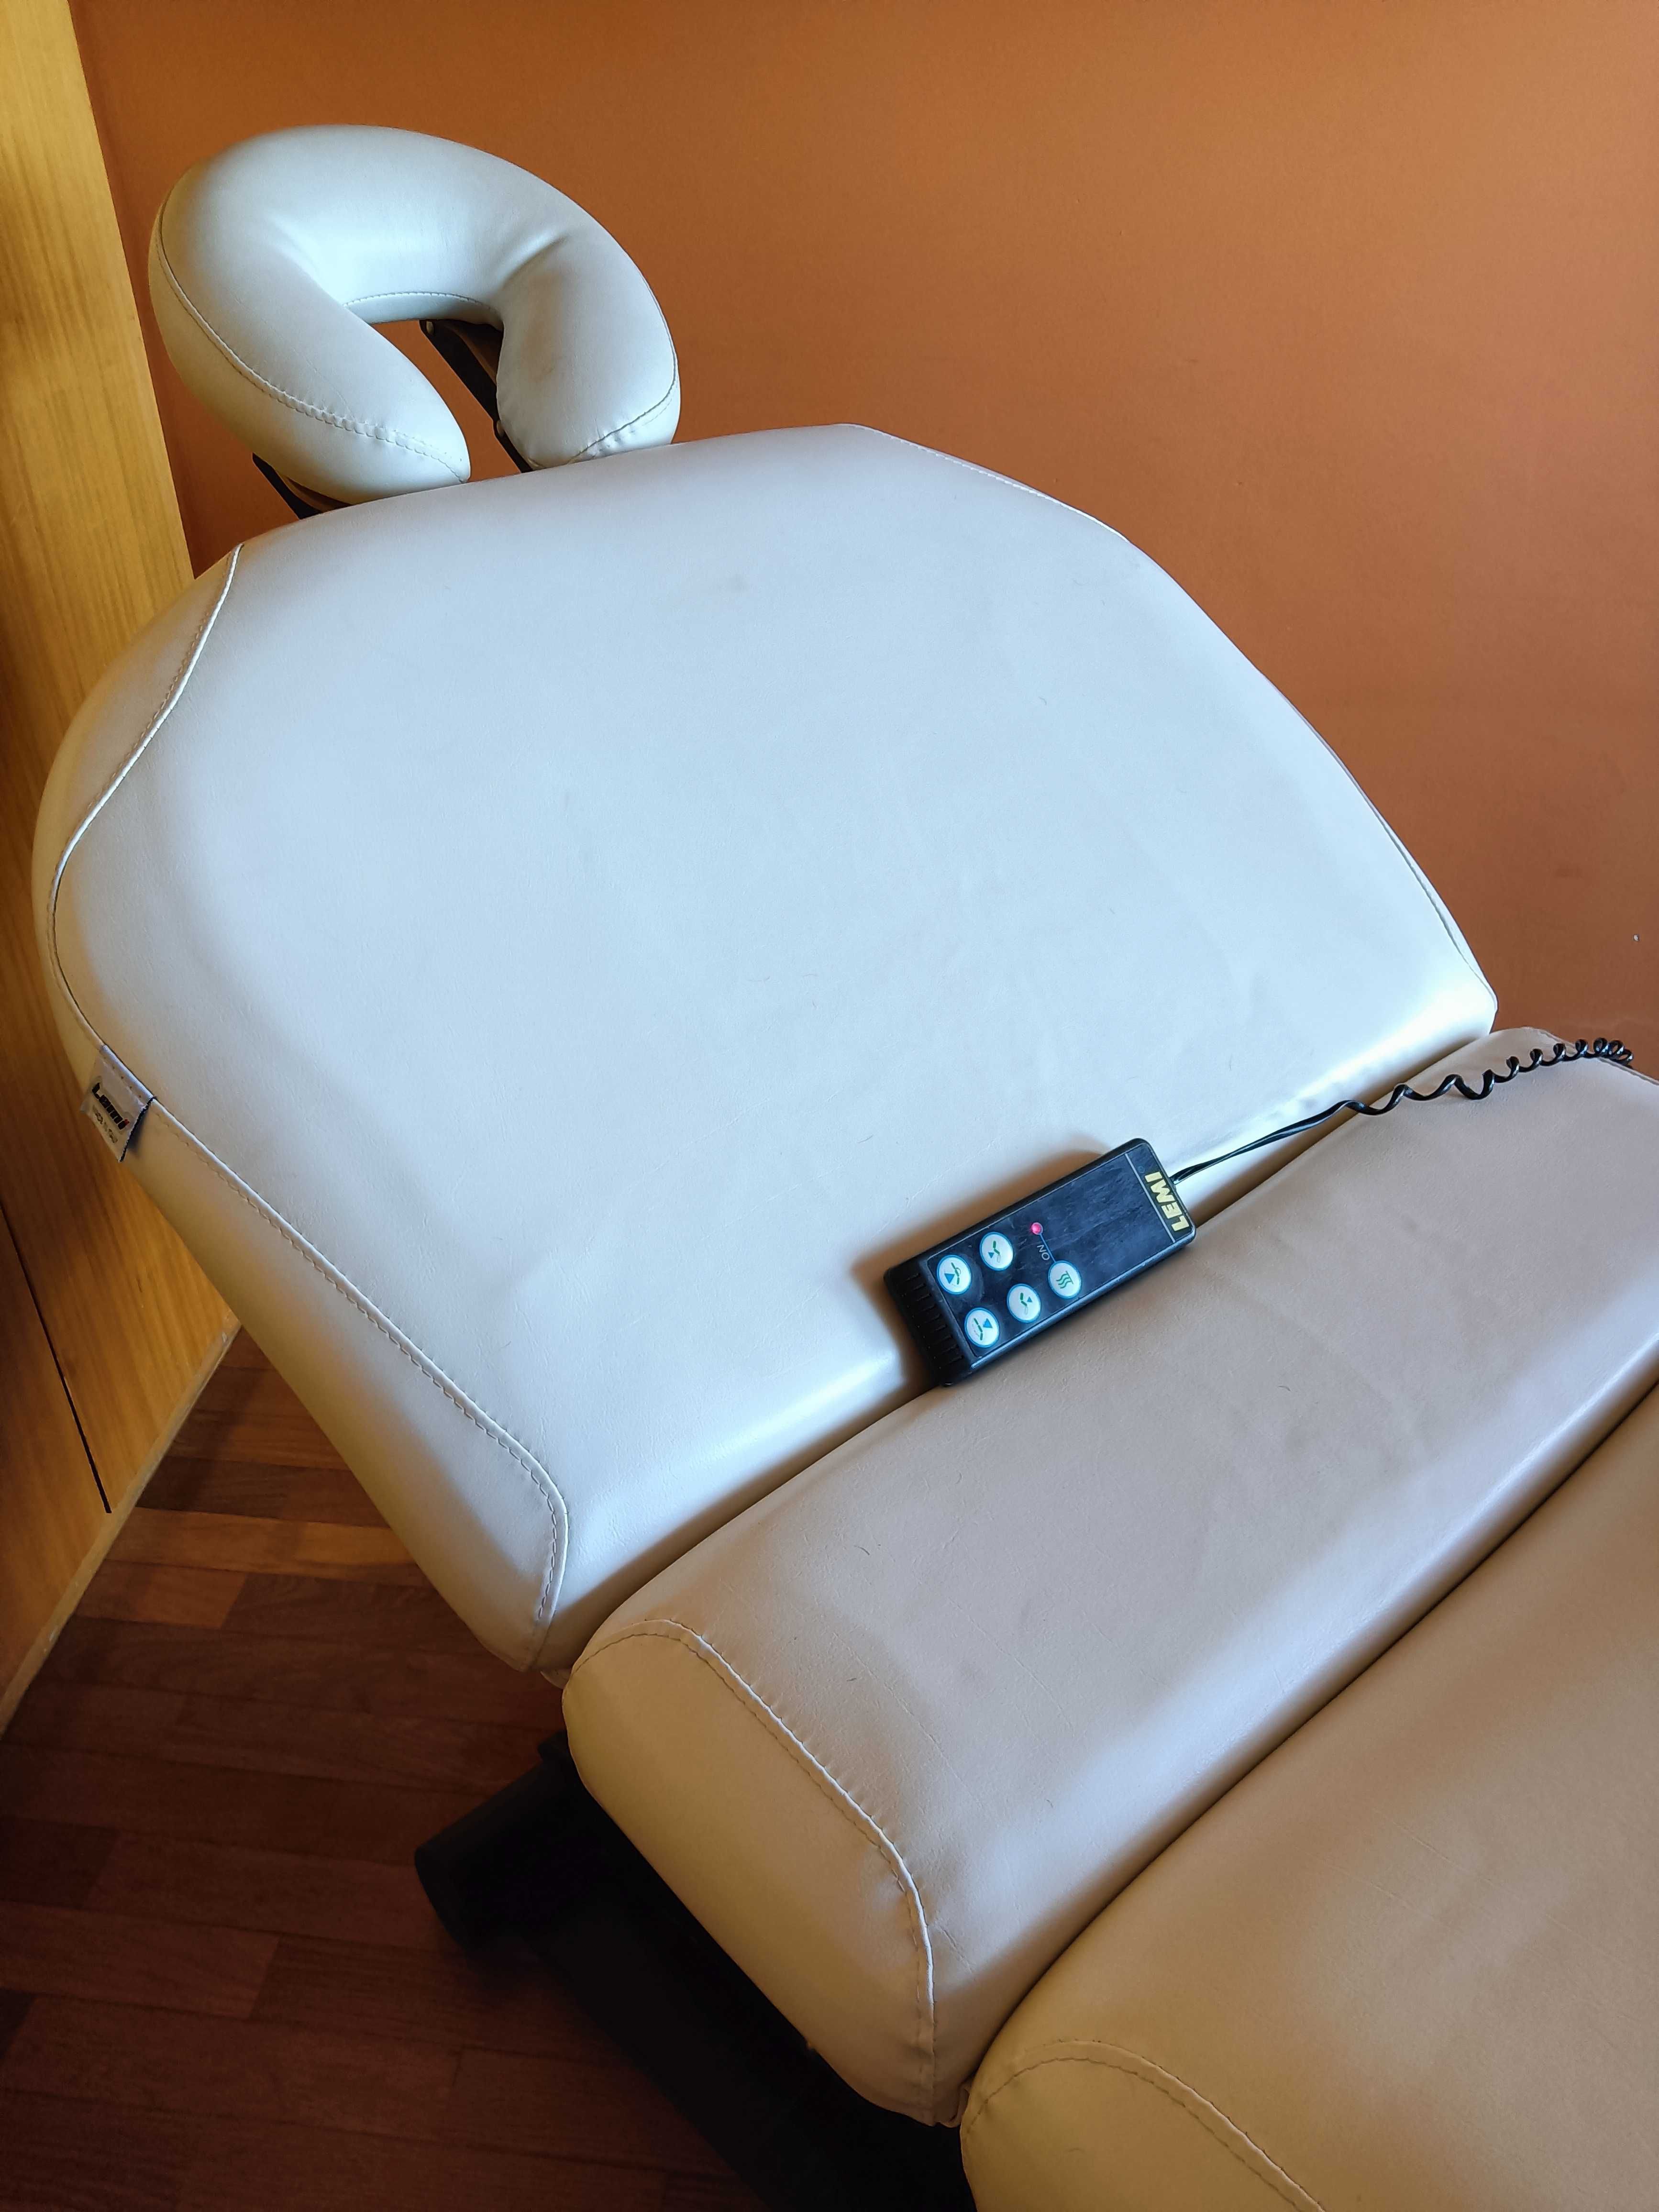 Marquesa de massagens elétrica